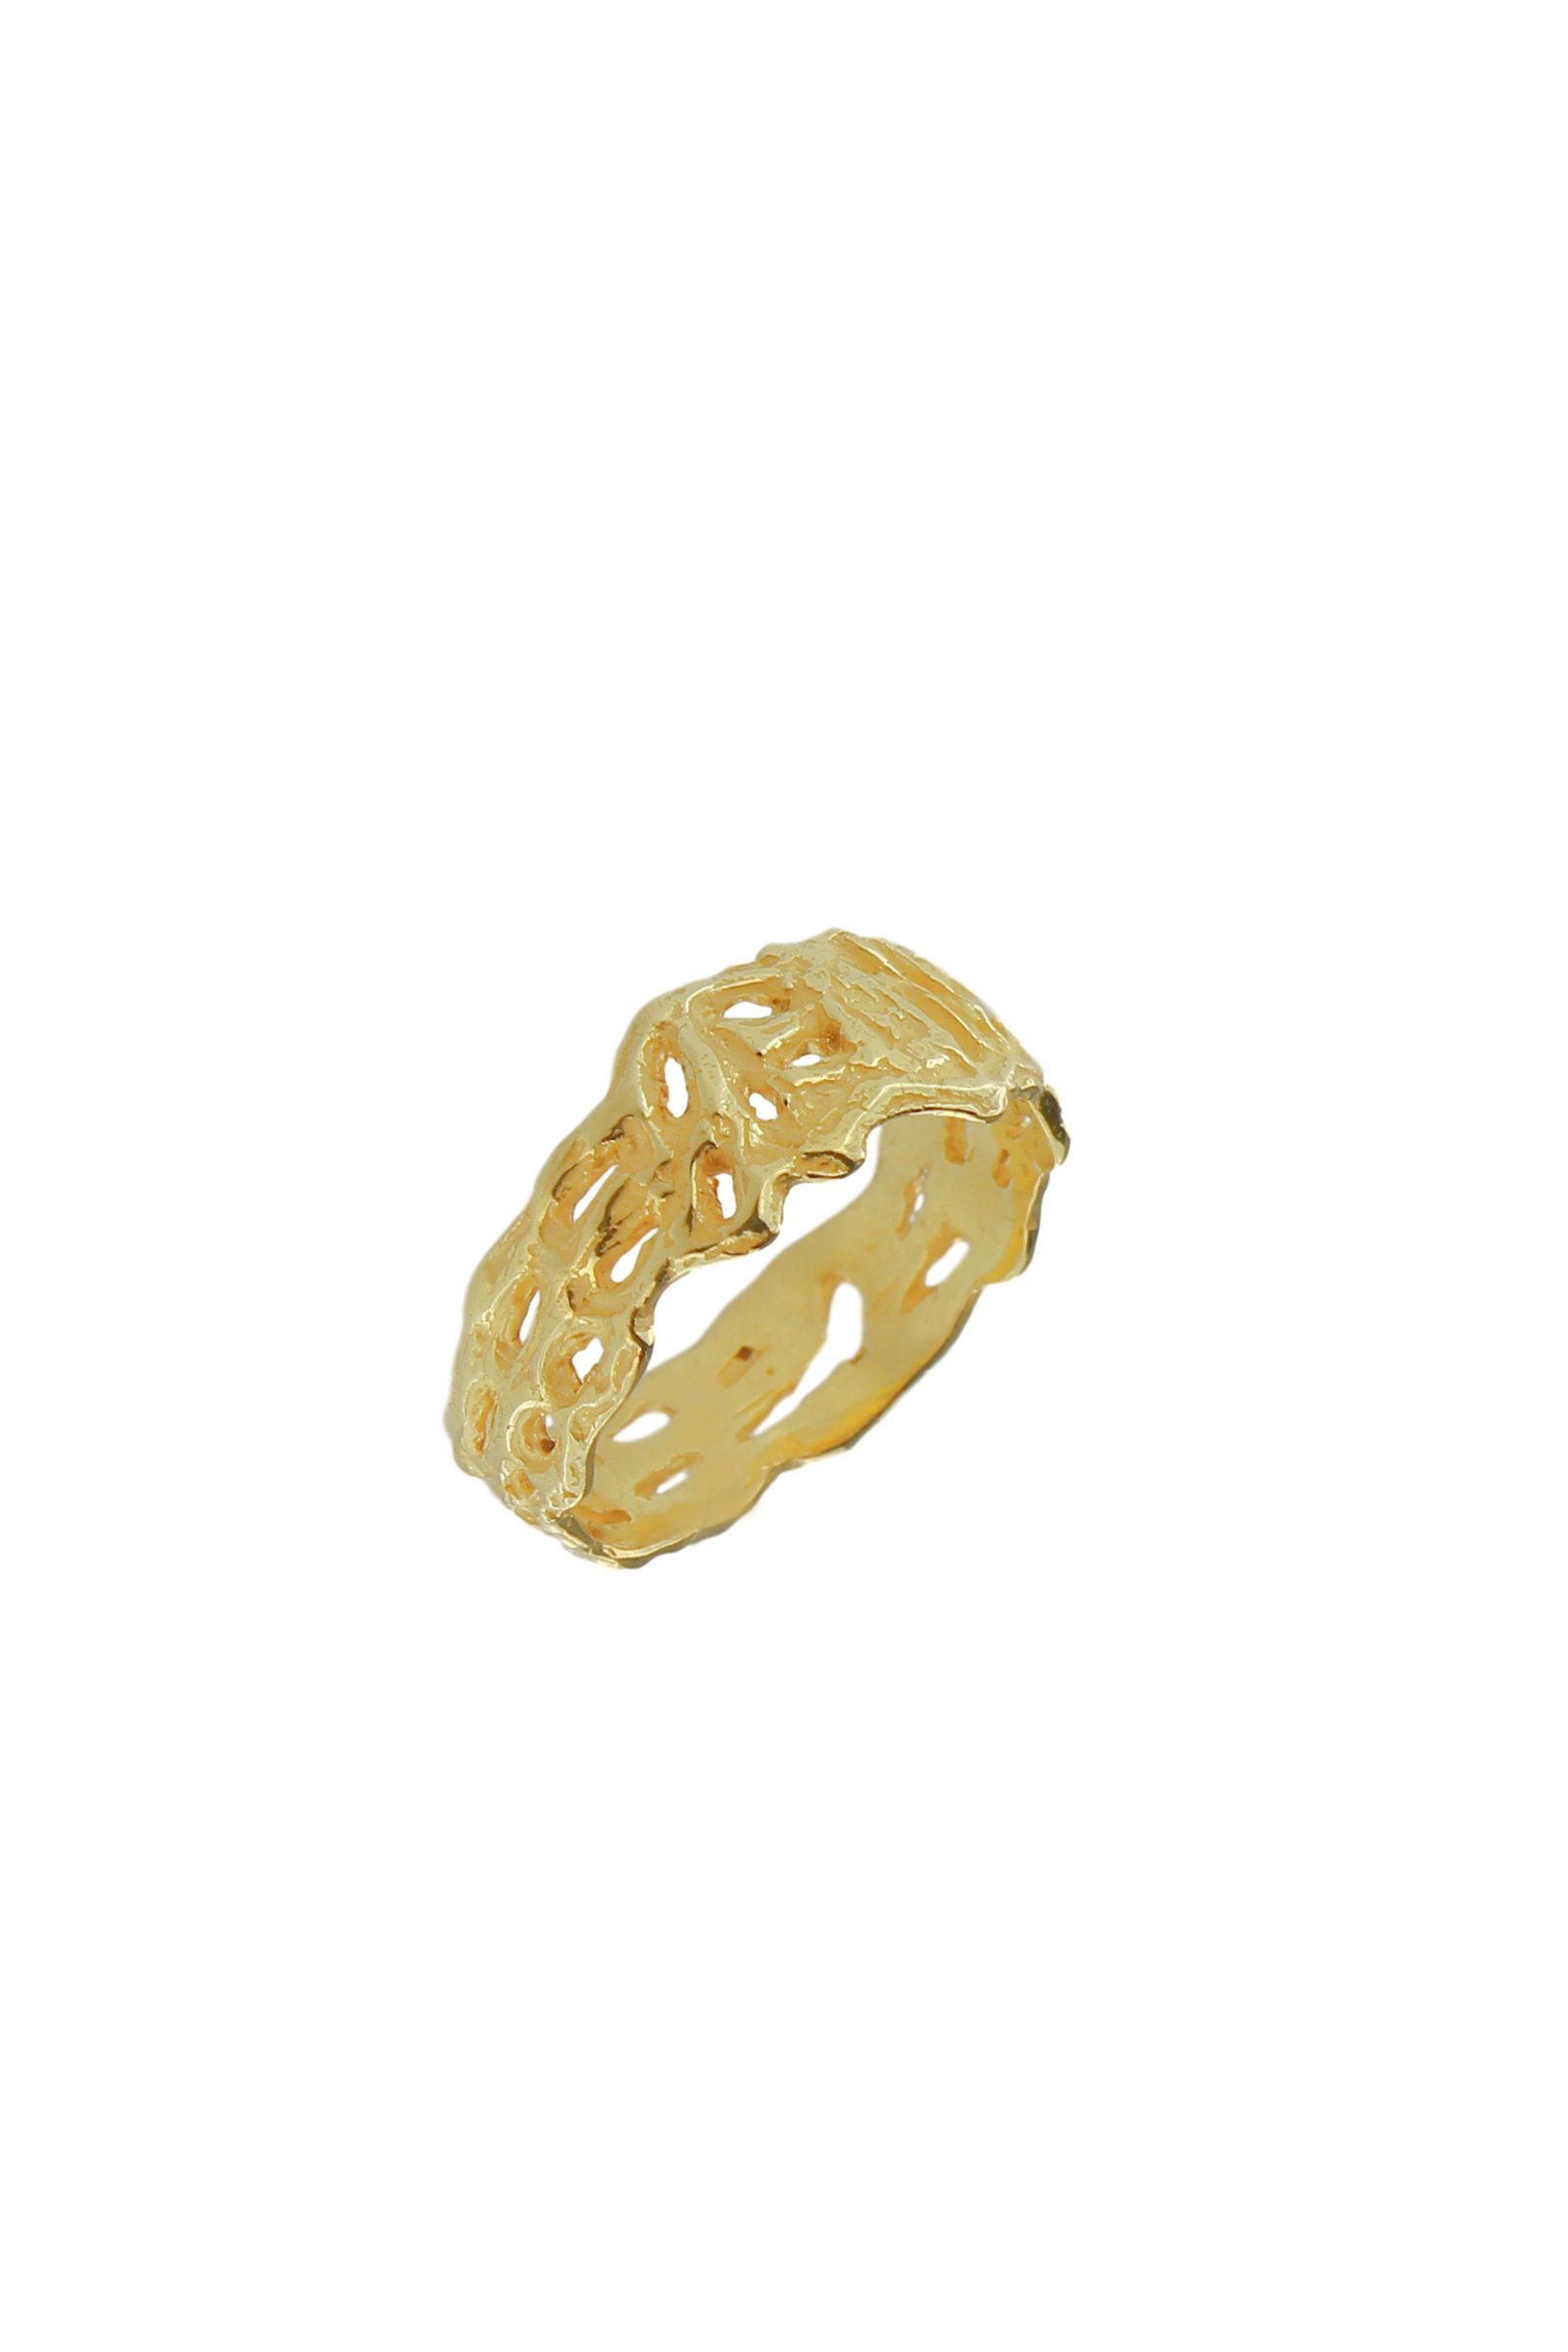 SE93B-18-Kt-Yellow-Gold-Band-Ring-1